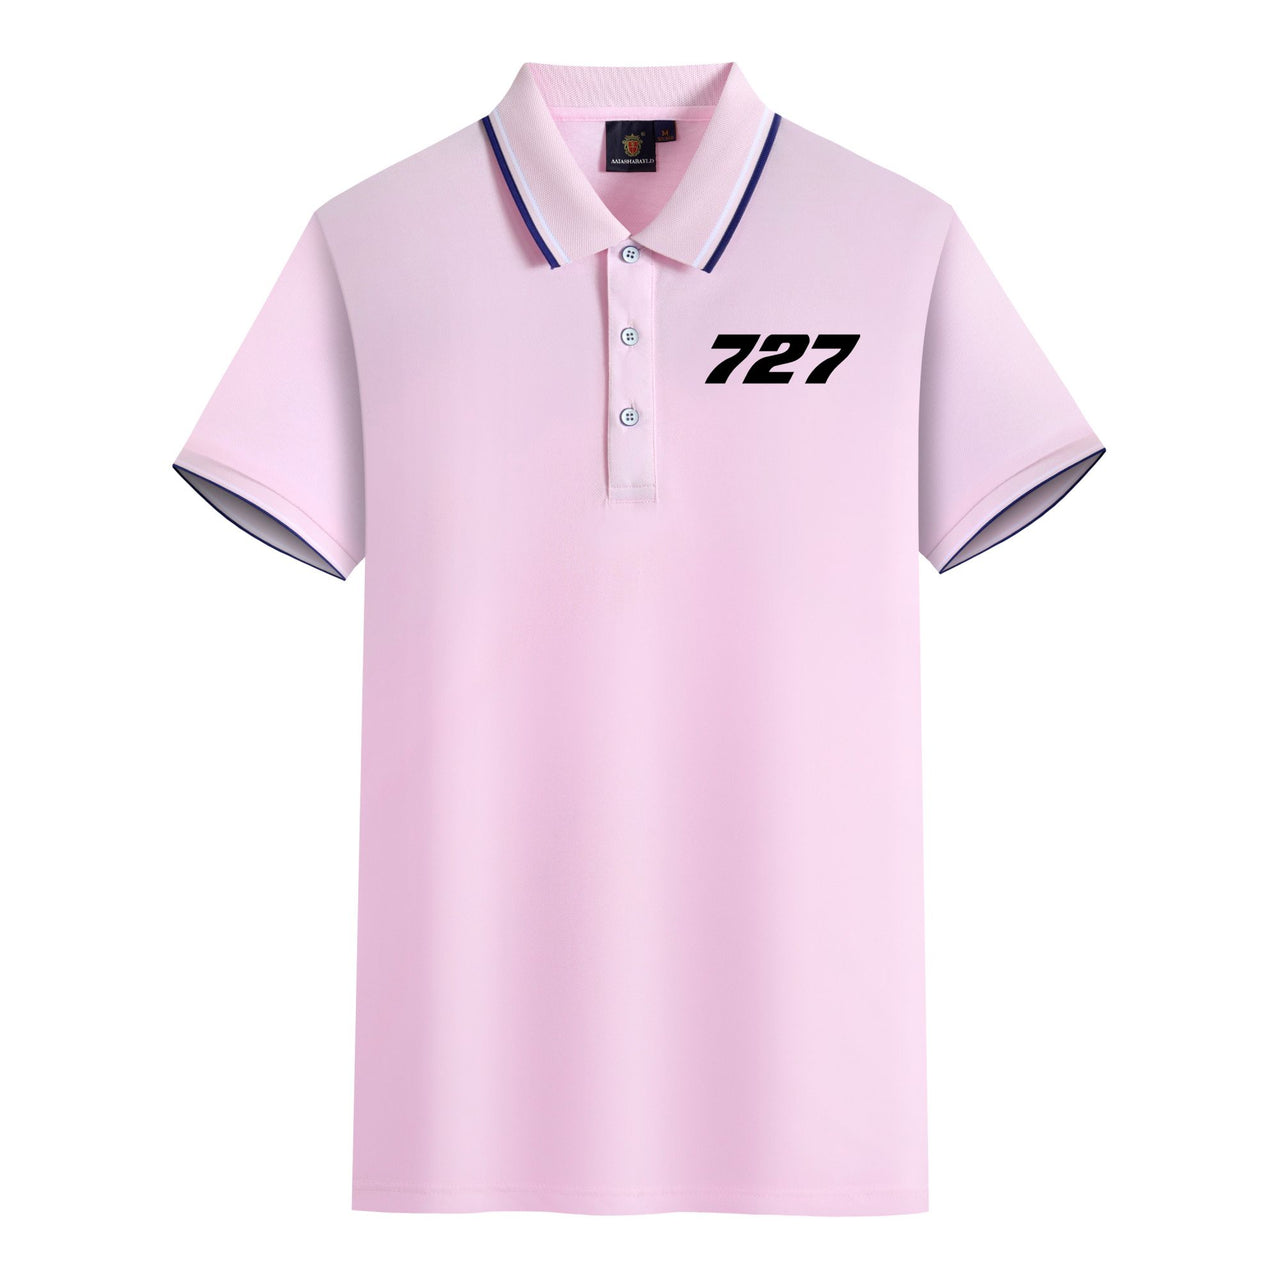 727 Flat Text Designed Stylish Polo T-Shirts